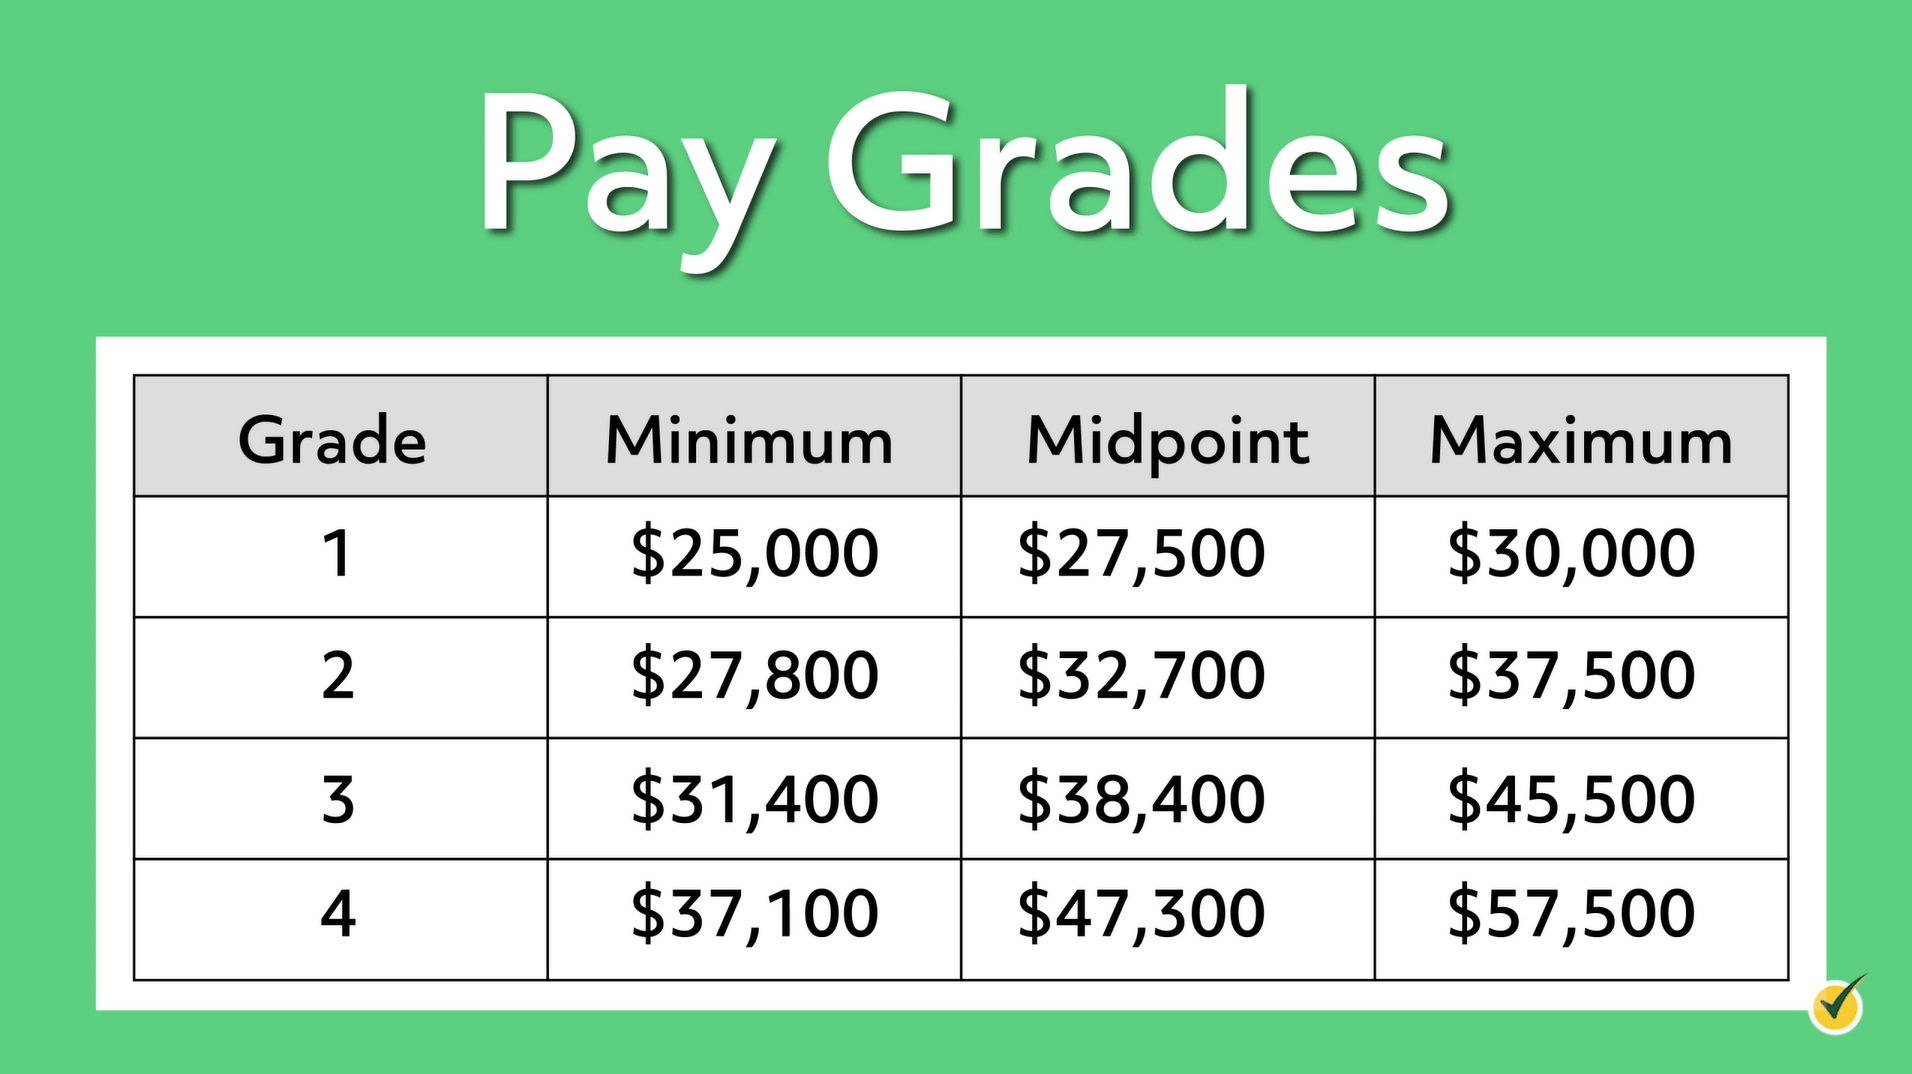 Table of minimum, medium, and maximum pay grades